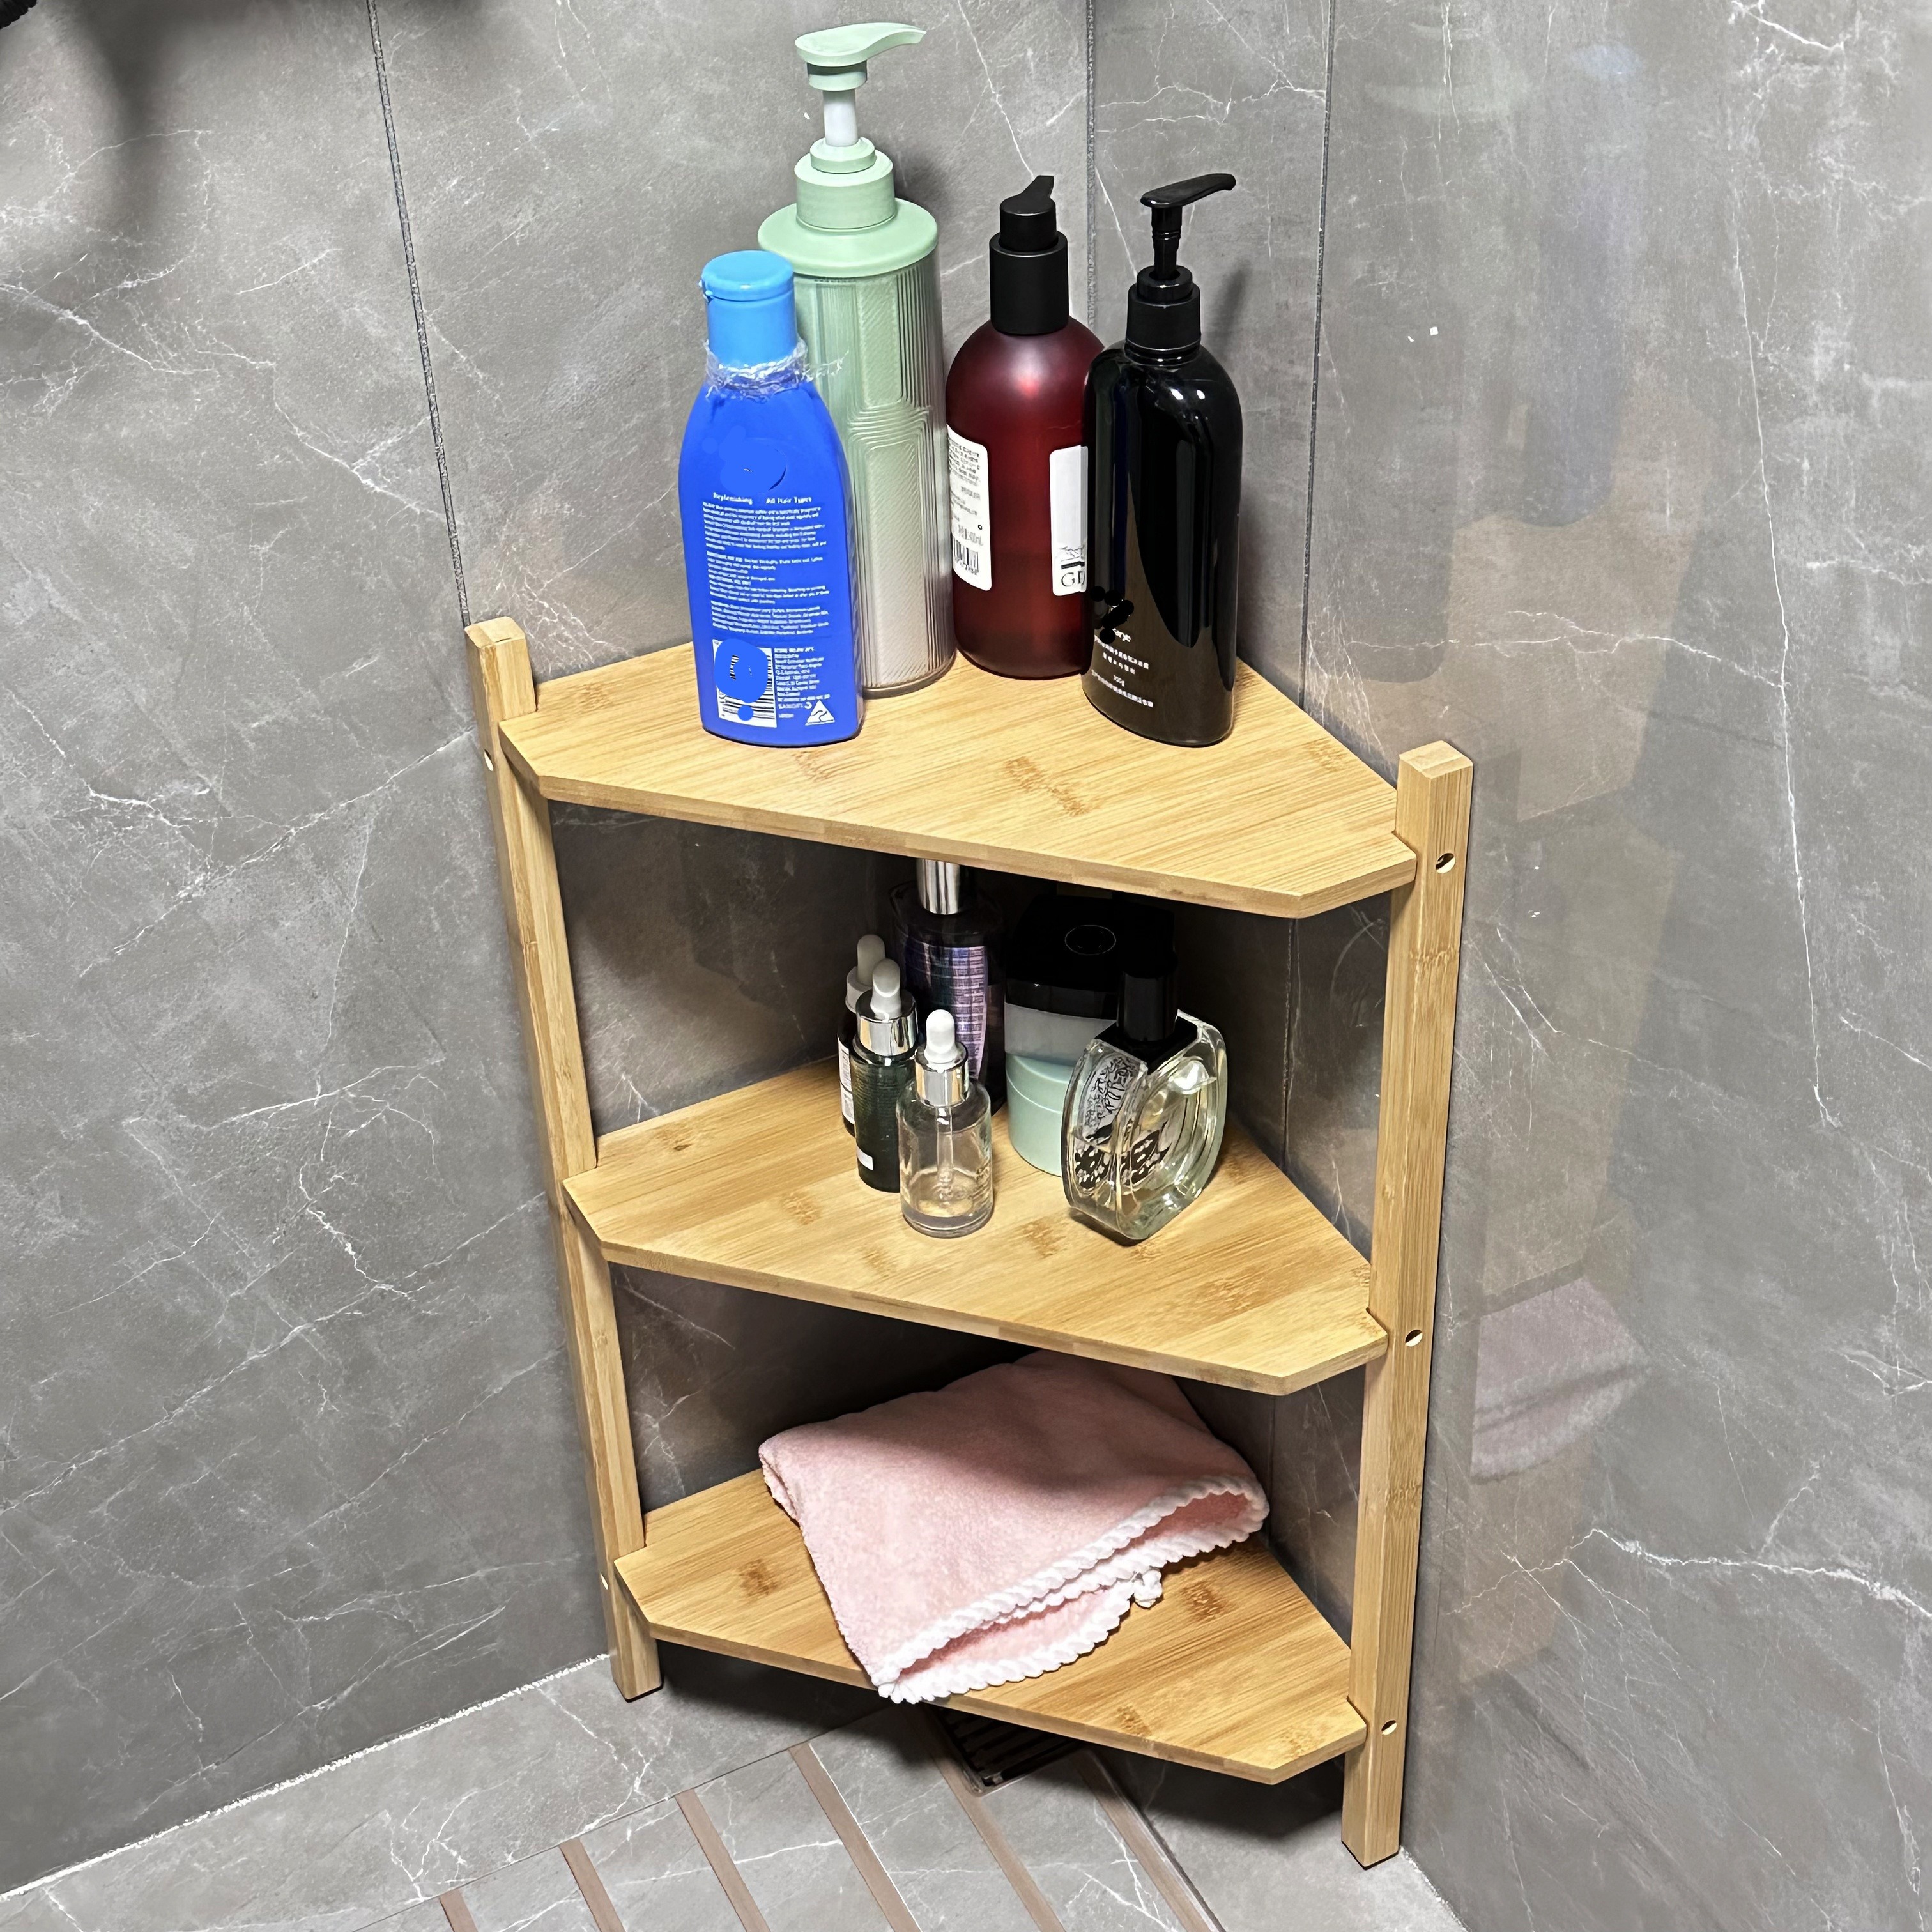 Bamboo Corner Shelf - 3 Tier  Shelves, Corner shower, Corner shower caddy